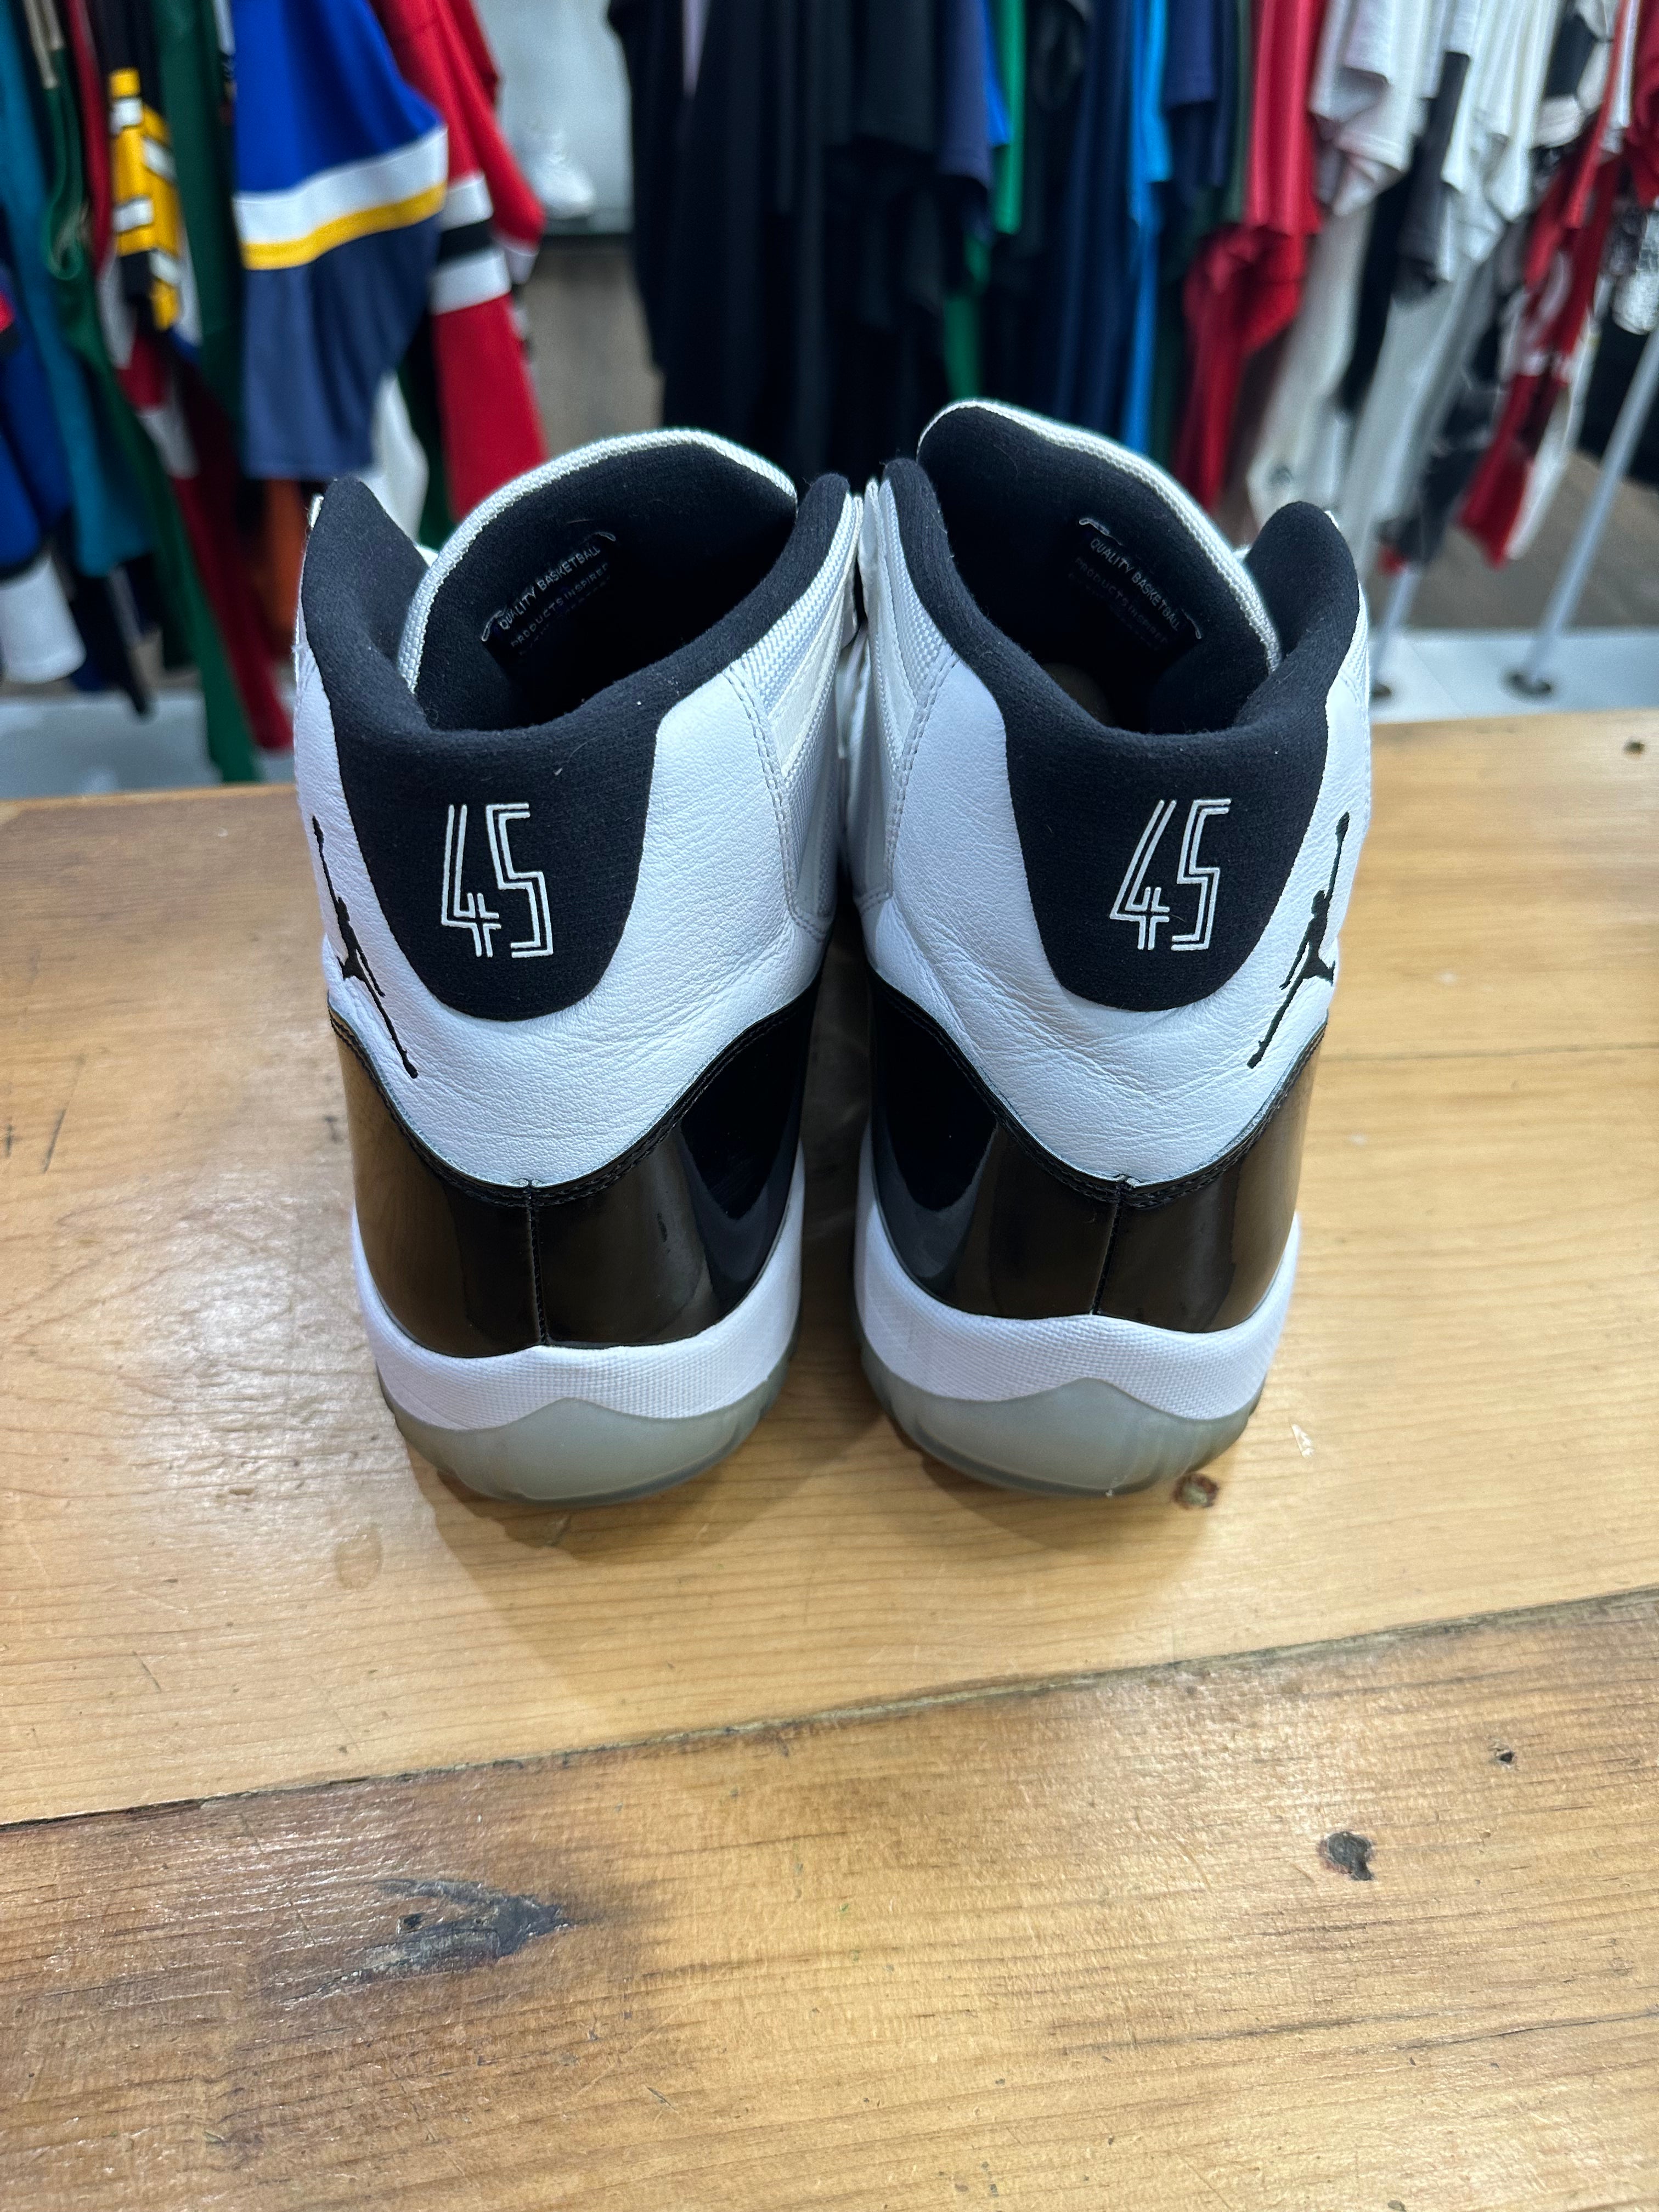 Air Jordan 11 Retro “Concord” Size 15